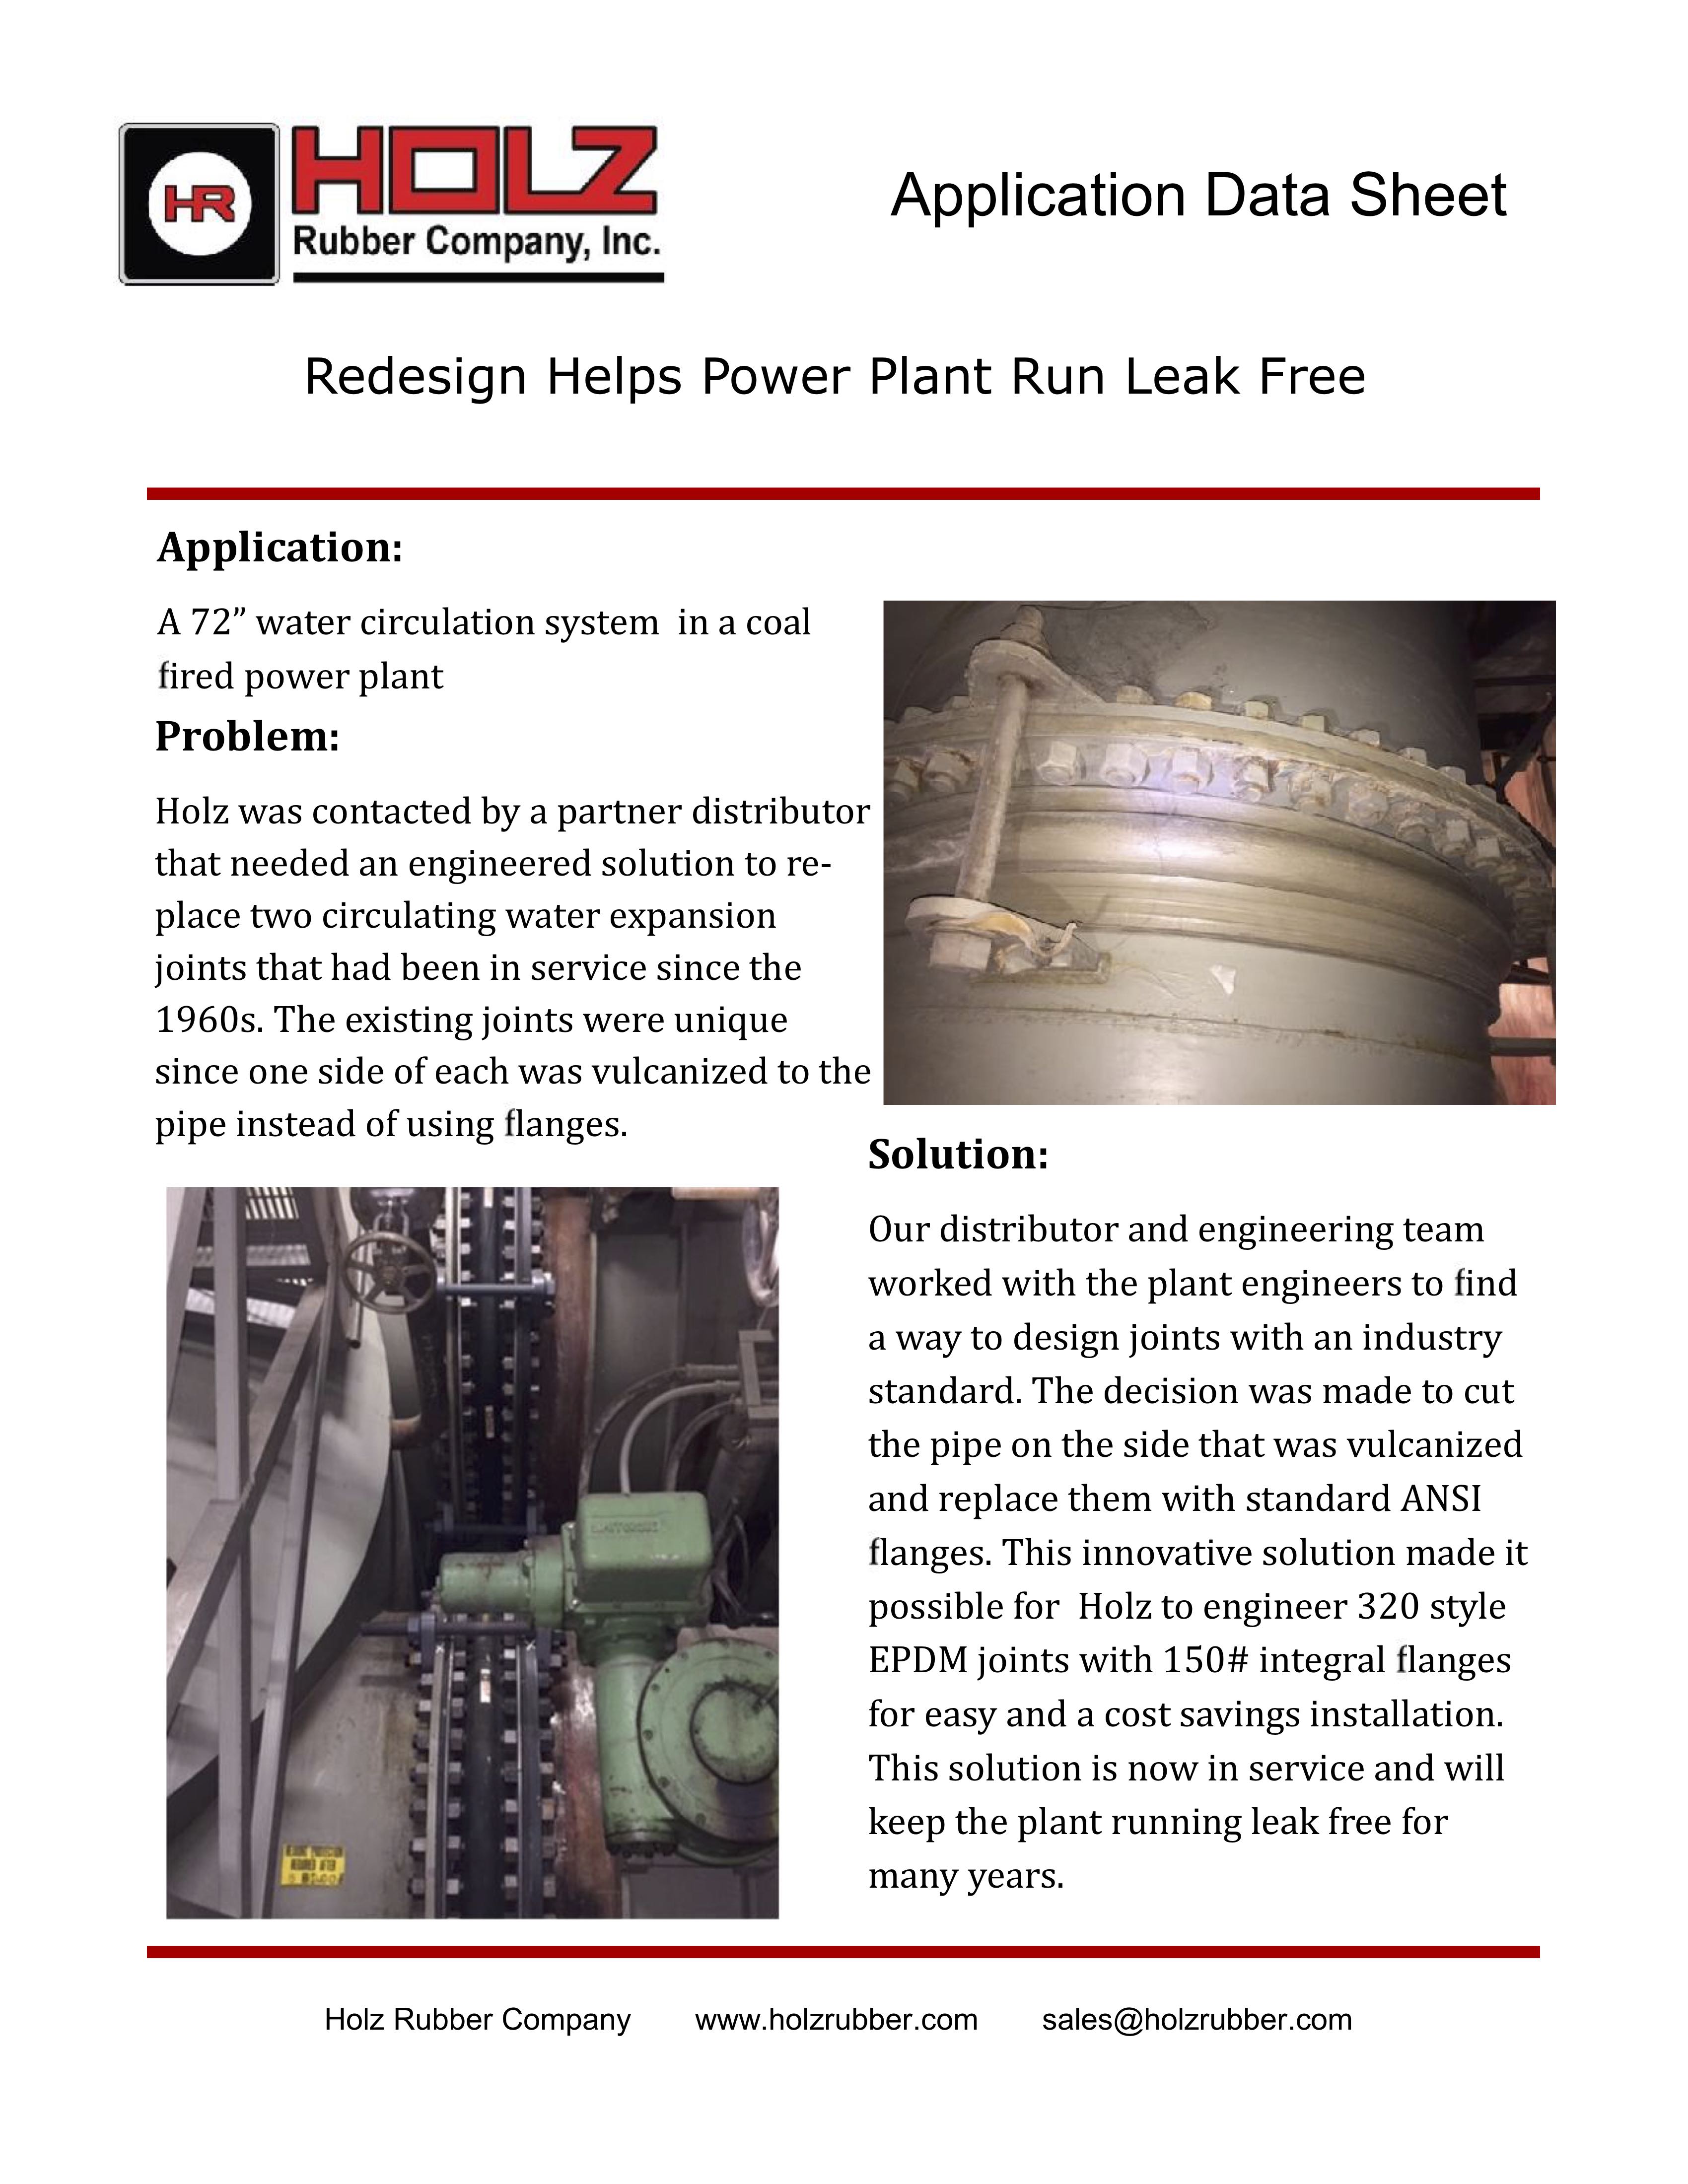 Redesign Helps Power Plant Run Leak Free